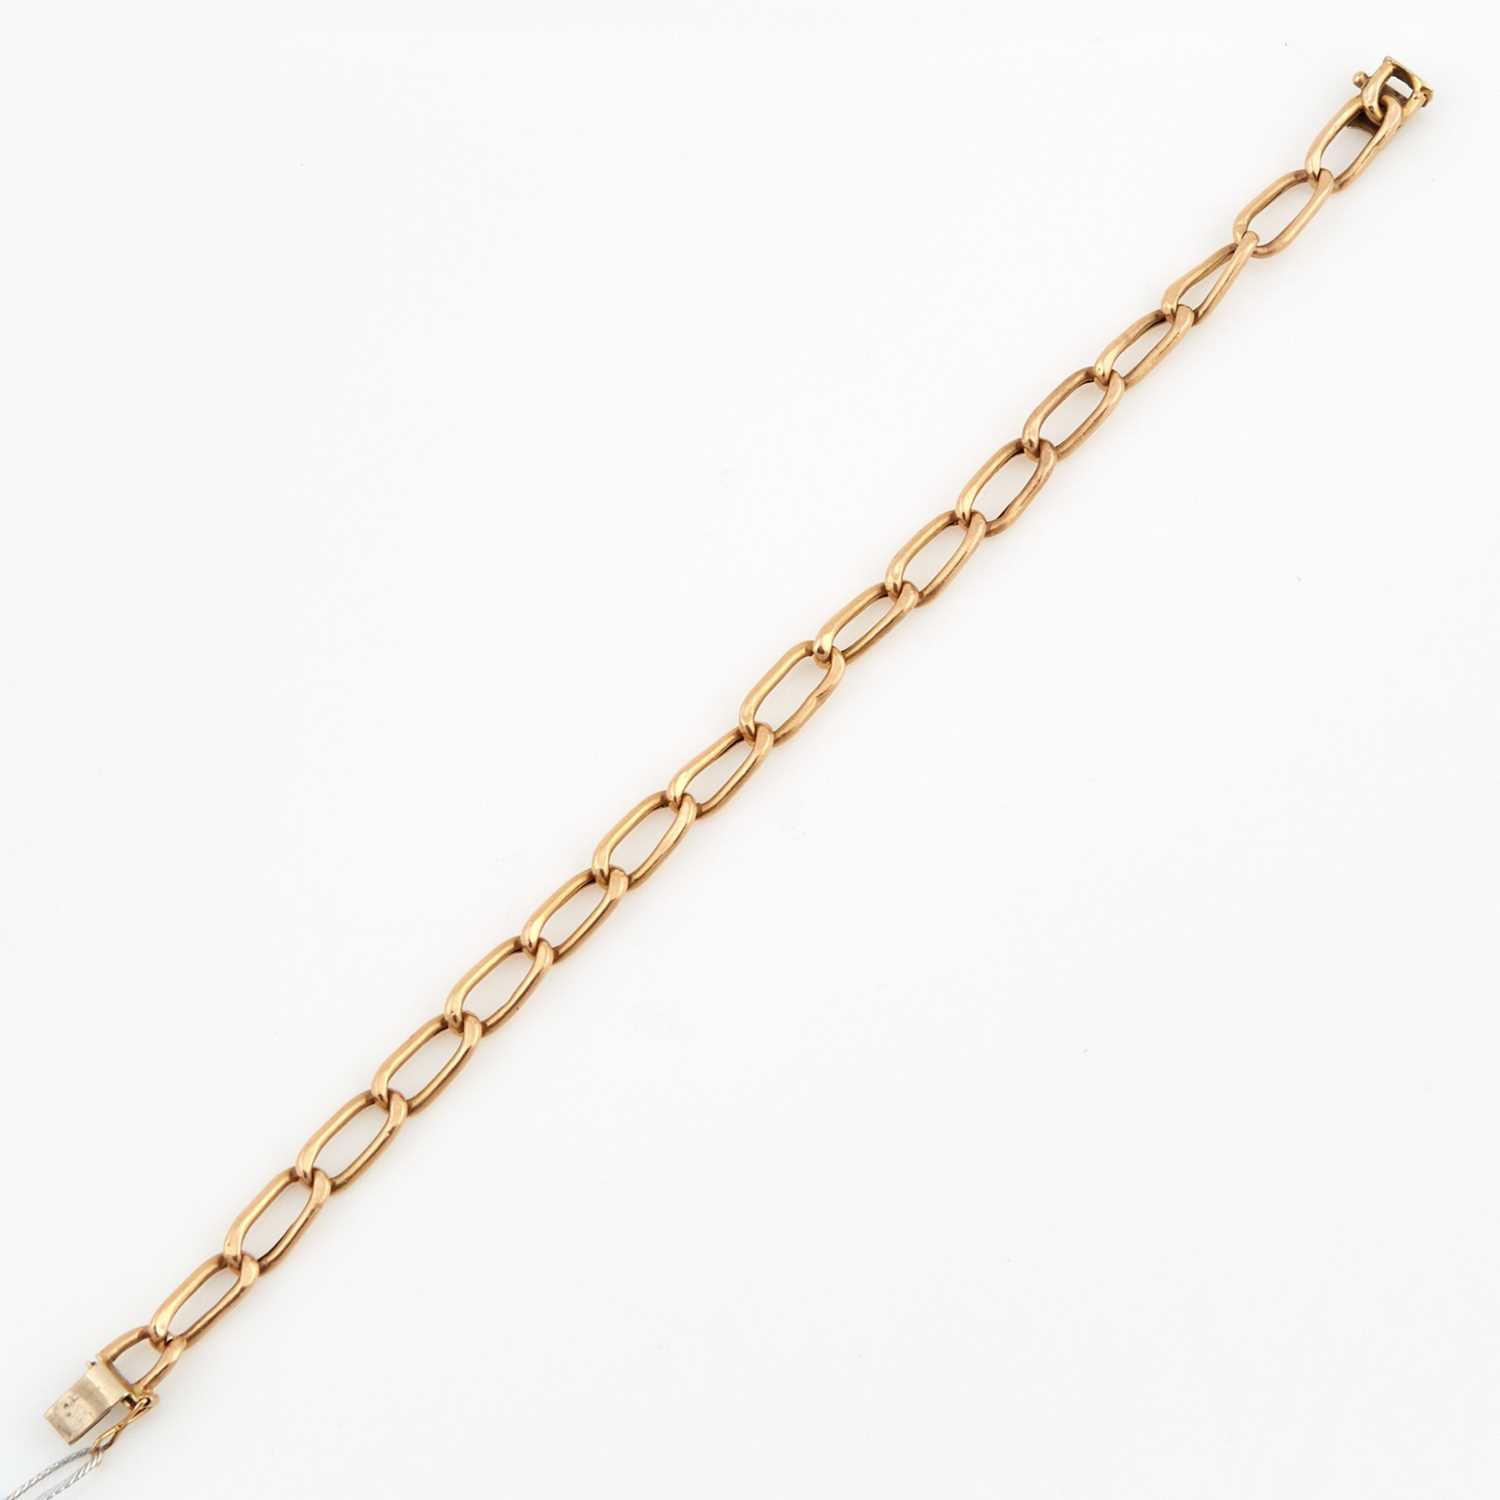 Lot 273 - Gold Flexible Bracelet, 14K 4 dwt., damaged